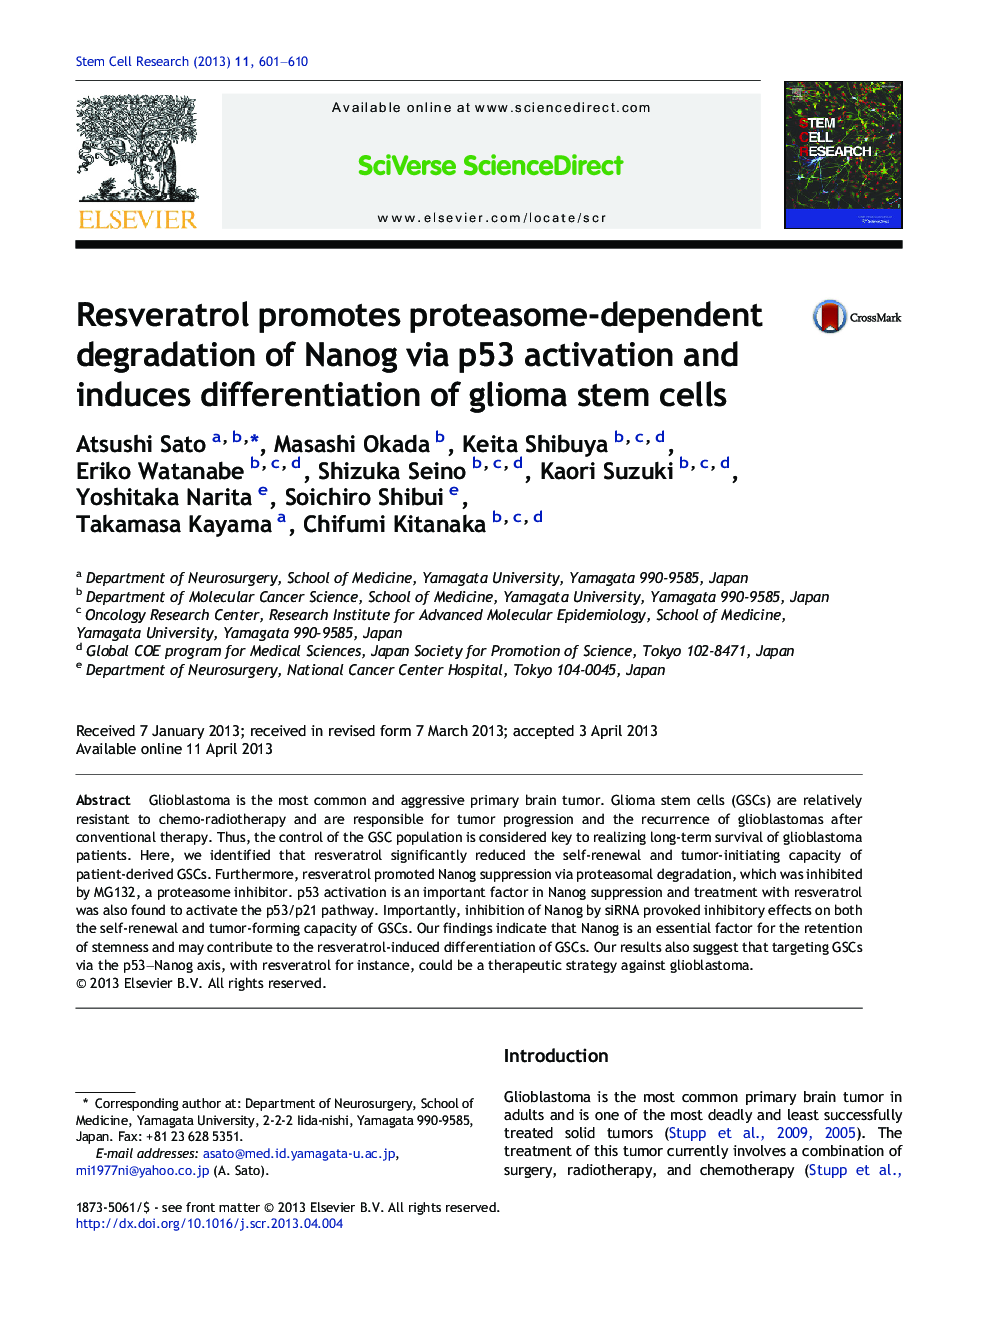 Resveratrol promotes proteasome-dependent degradation of Nanog via p53 activation and induces differentiation of glioma stem cells